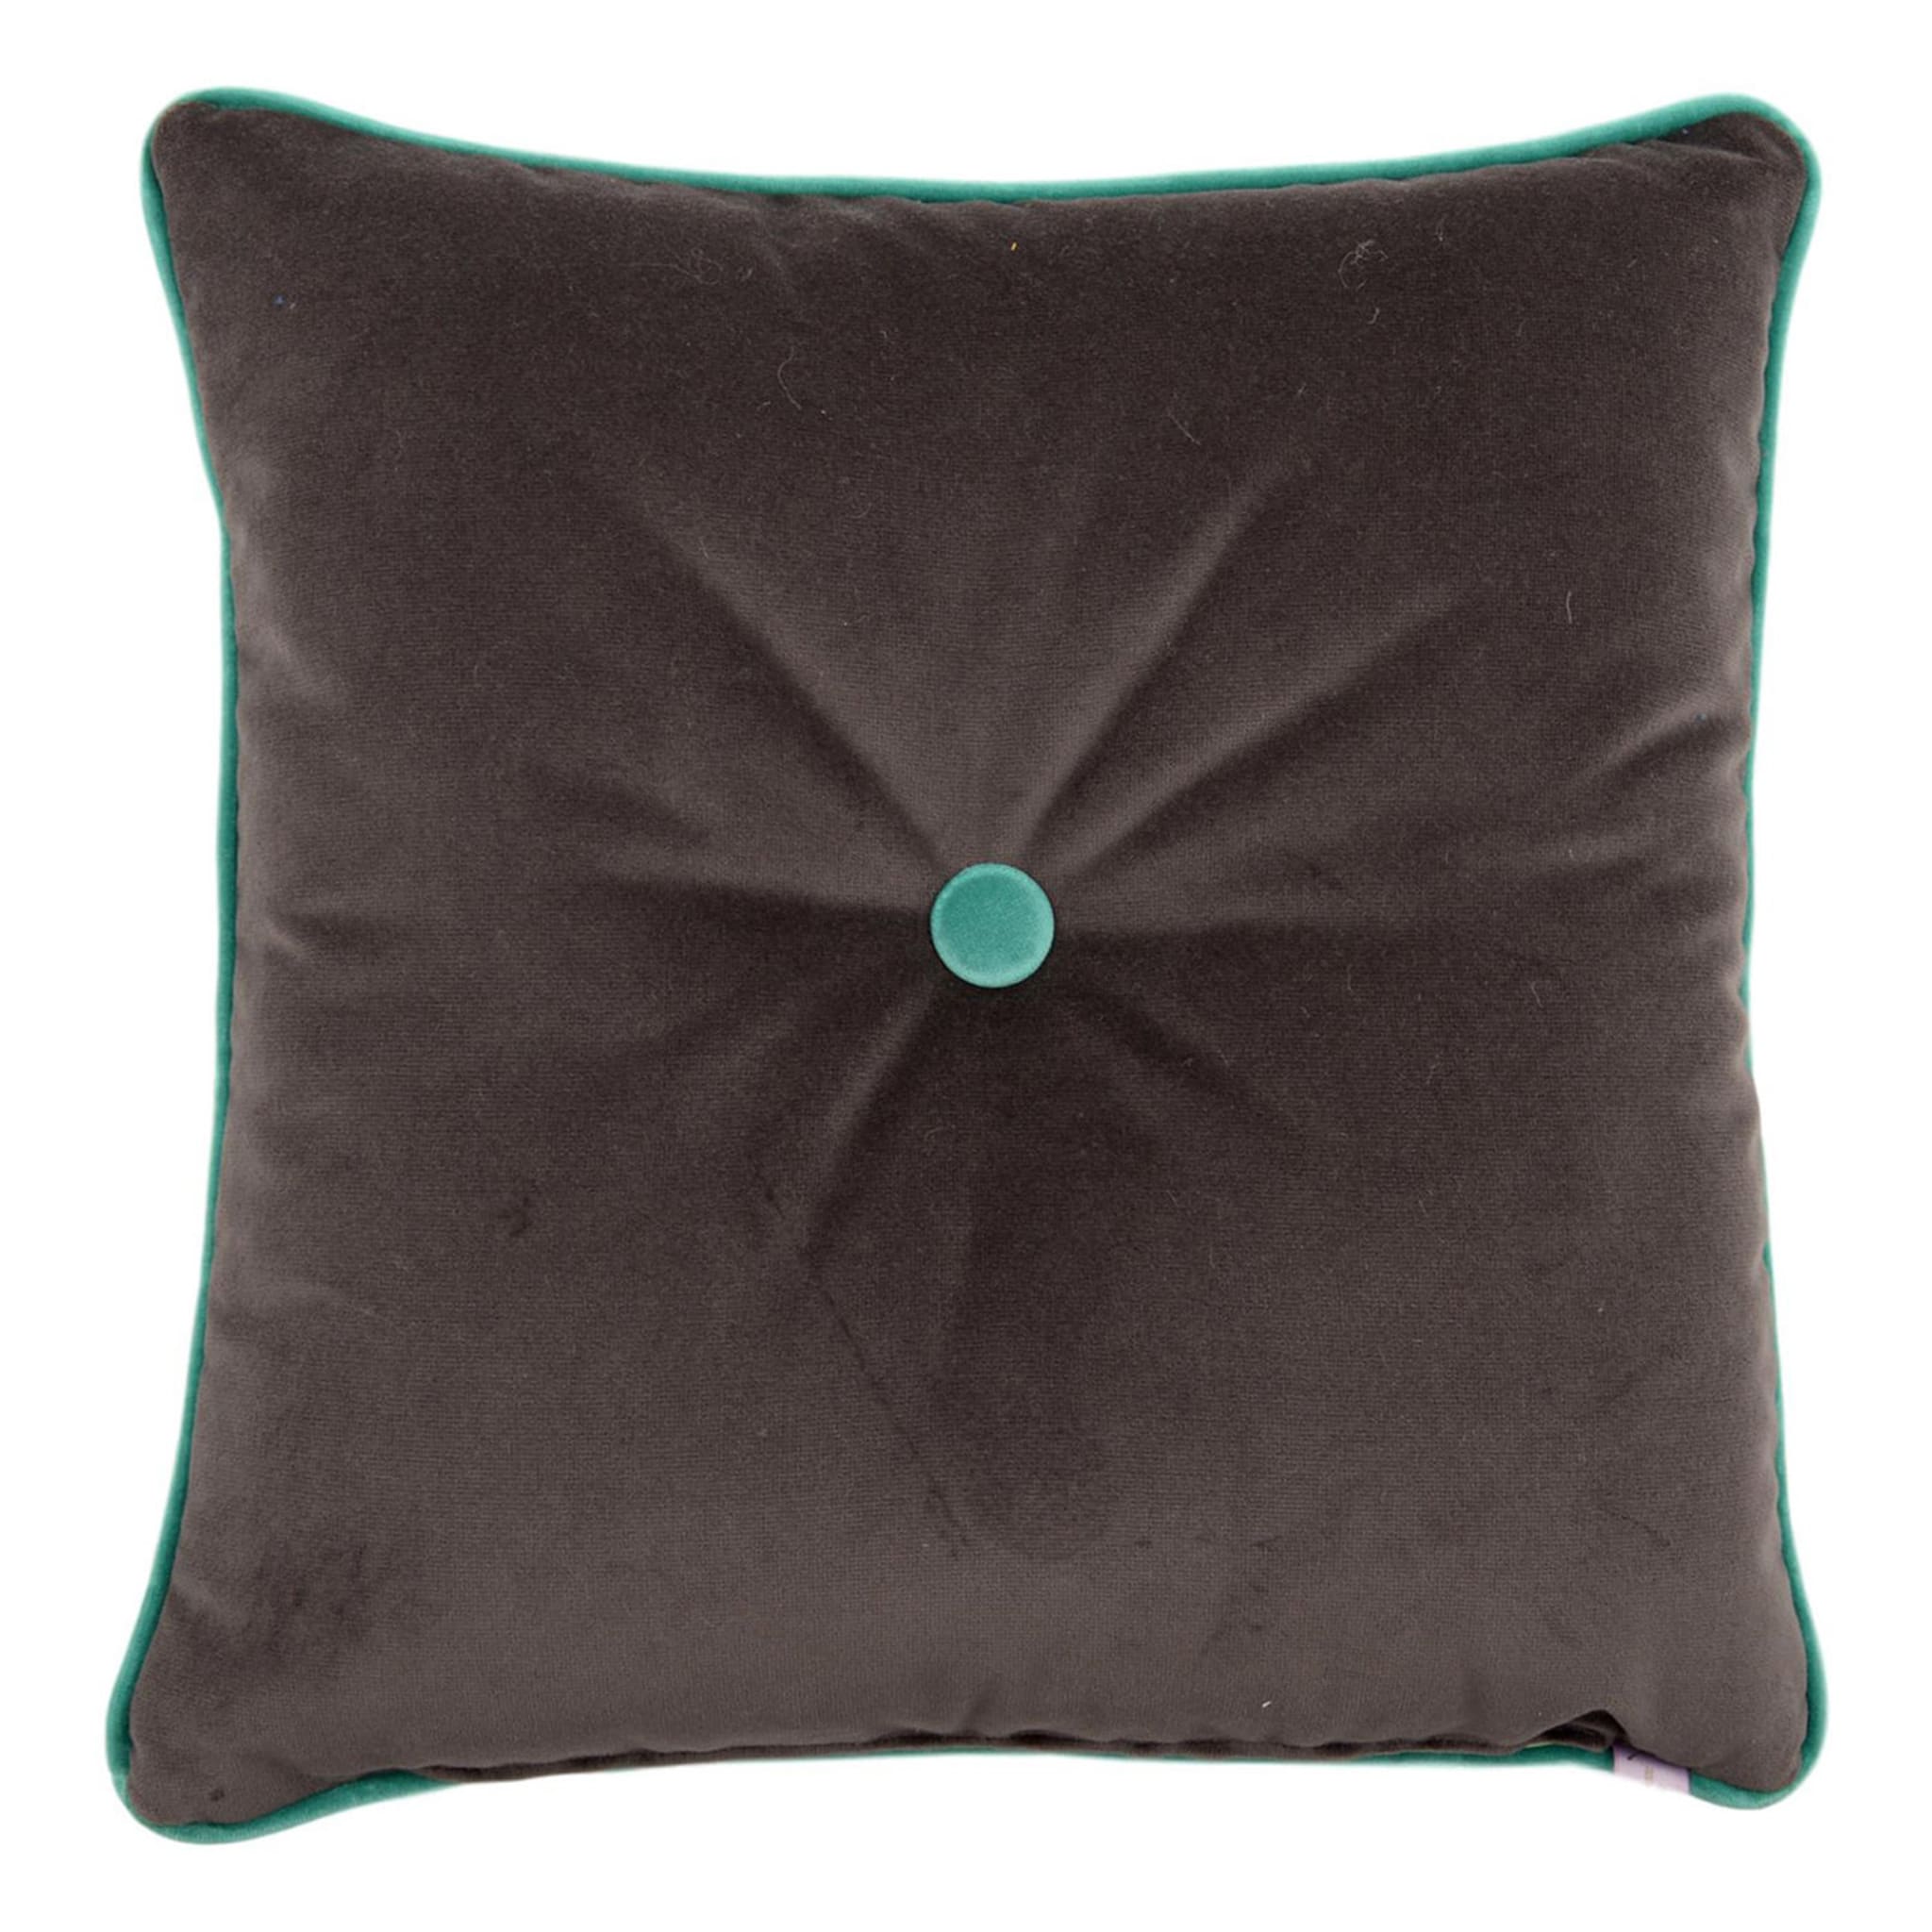 Green Carrè Cushion in geometric jacquard fabric - Alternative view 3